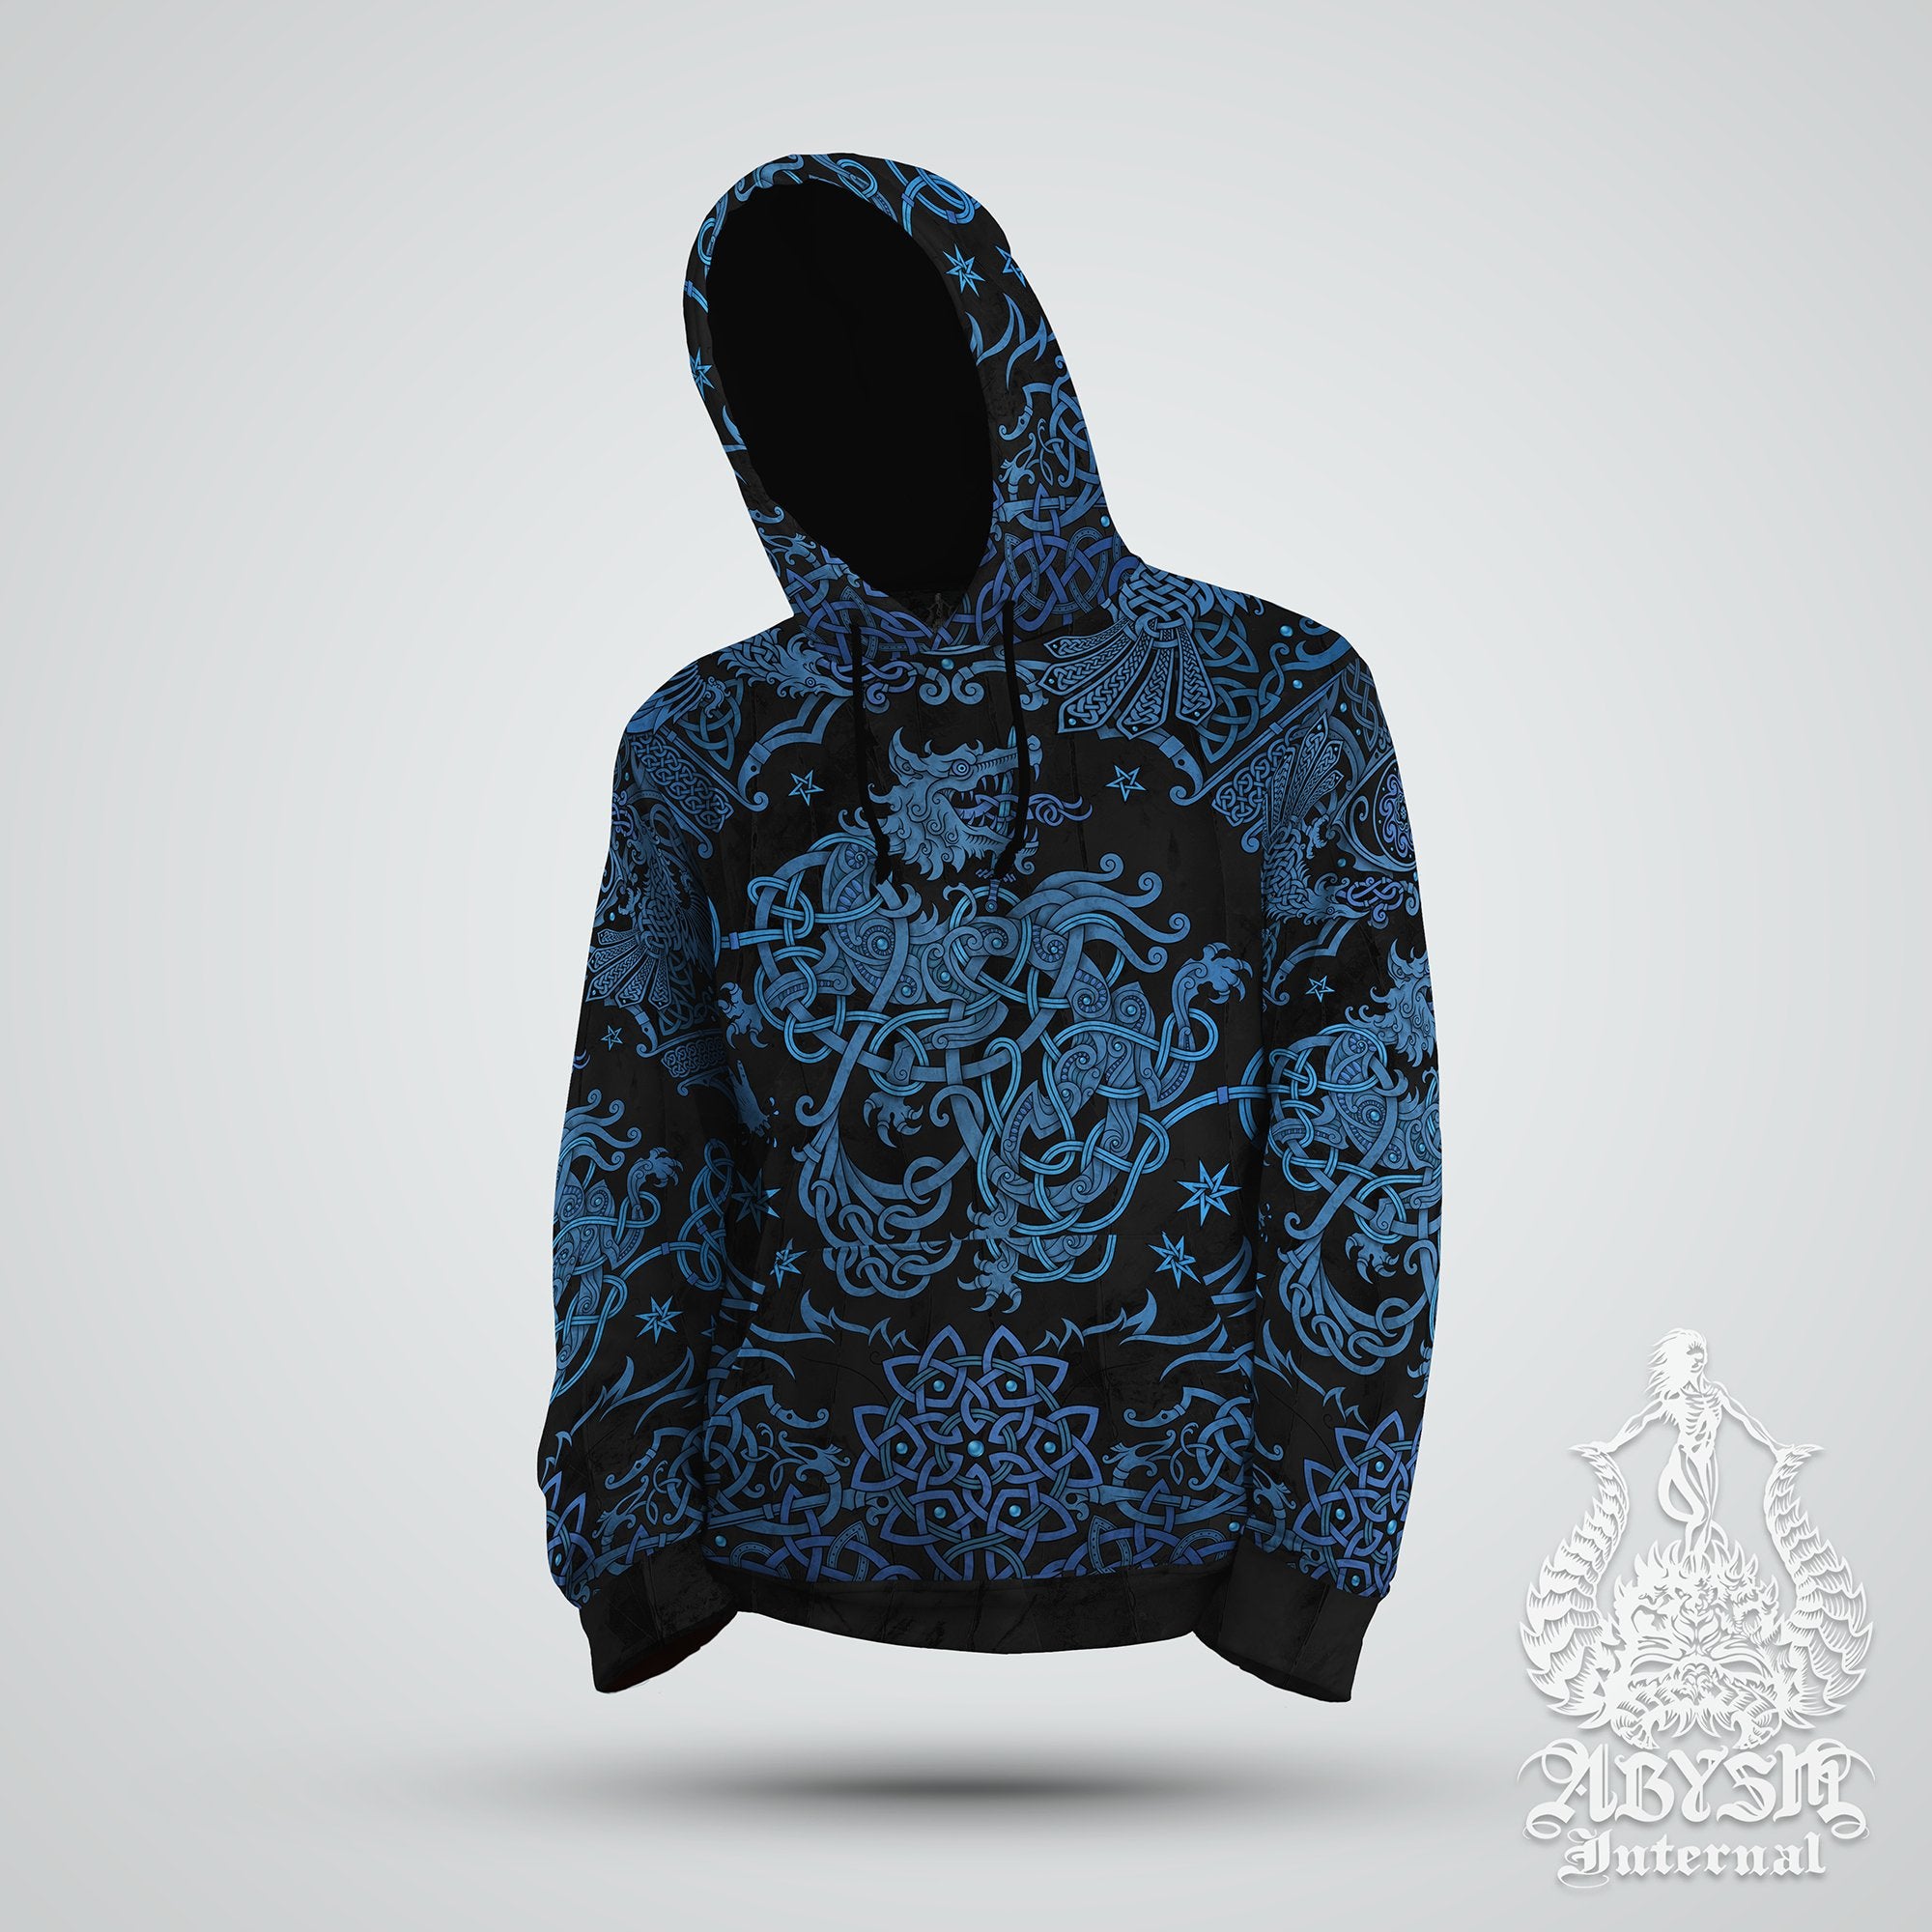 Fenrir Hoodie, Nordic Wolf Sweater, Viking Pullover, Norse Art Street Outfit, Pagan Knotwork Streetwear, Alternative Clothing, Unisex - Black Blue - Abysm Internal